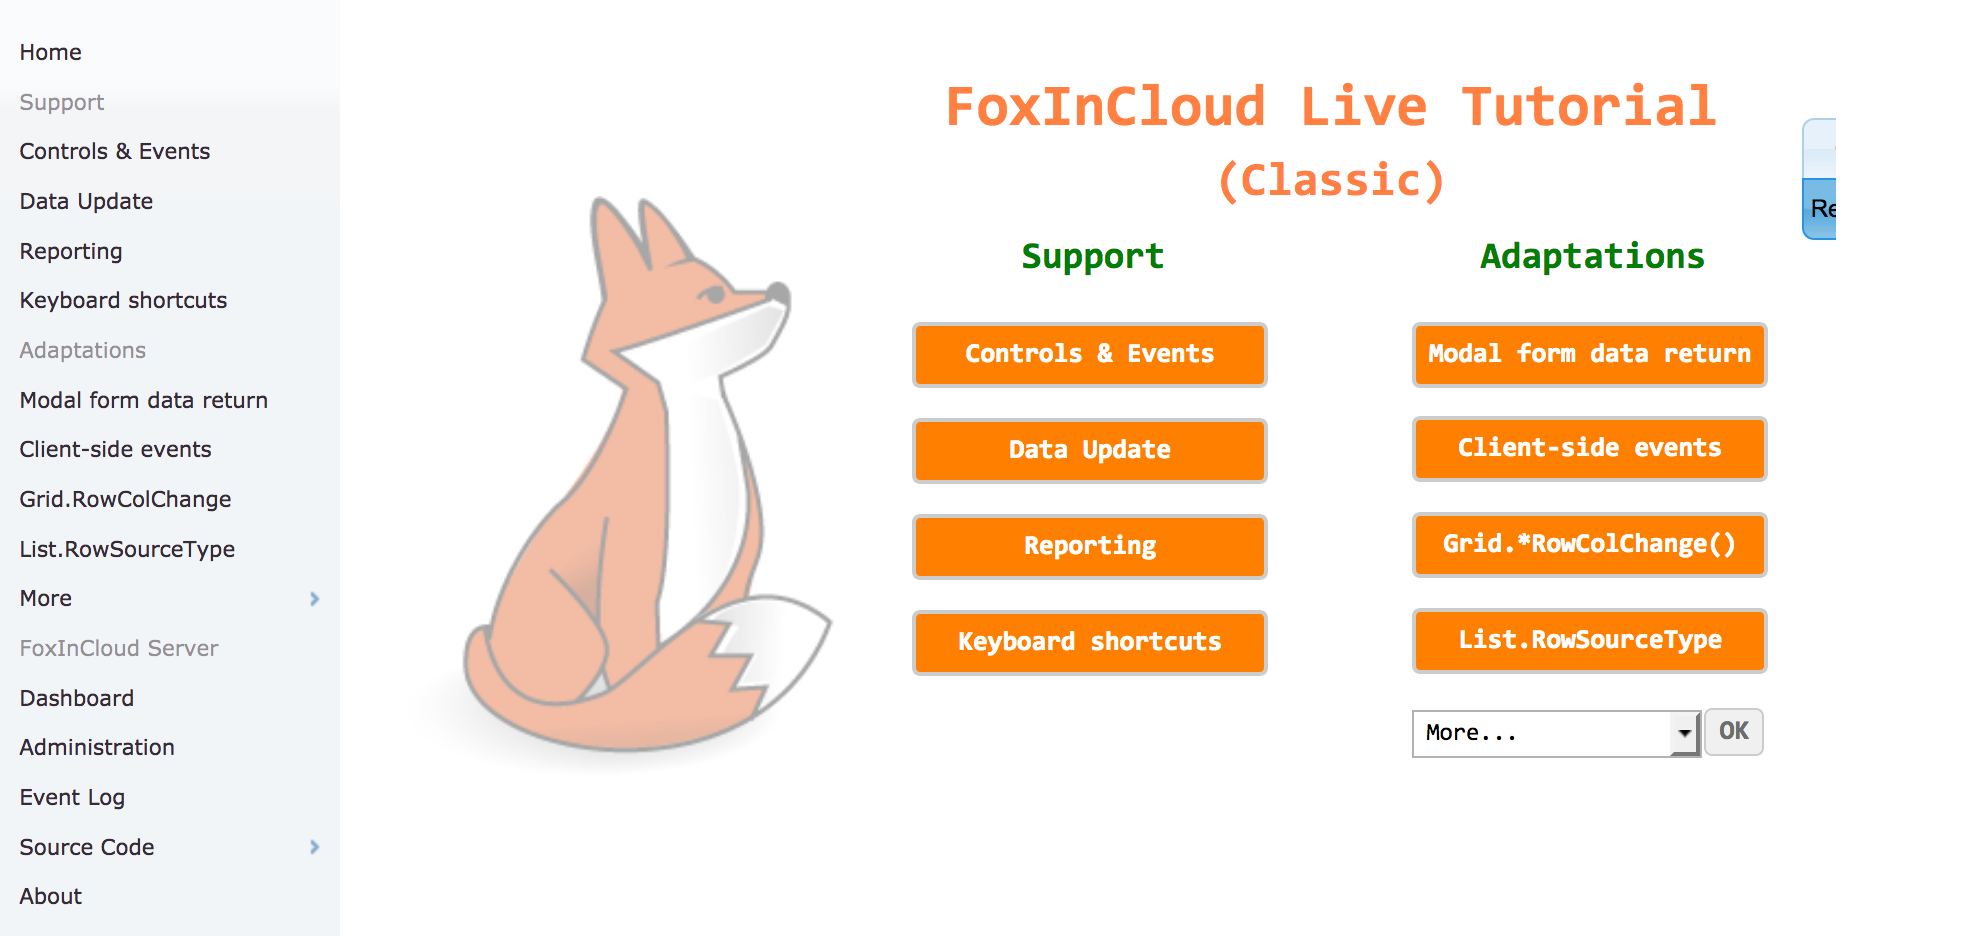 FoxInCloud Live Tutorial home, classic mode